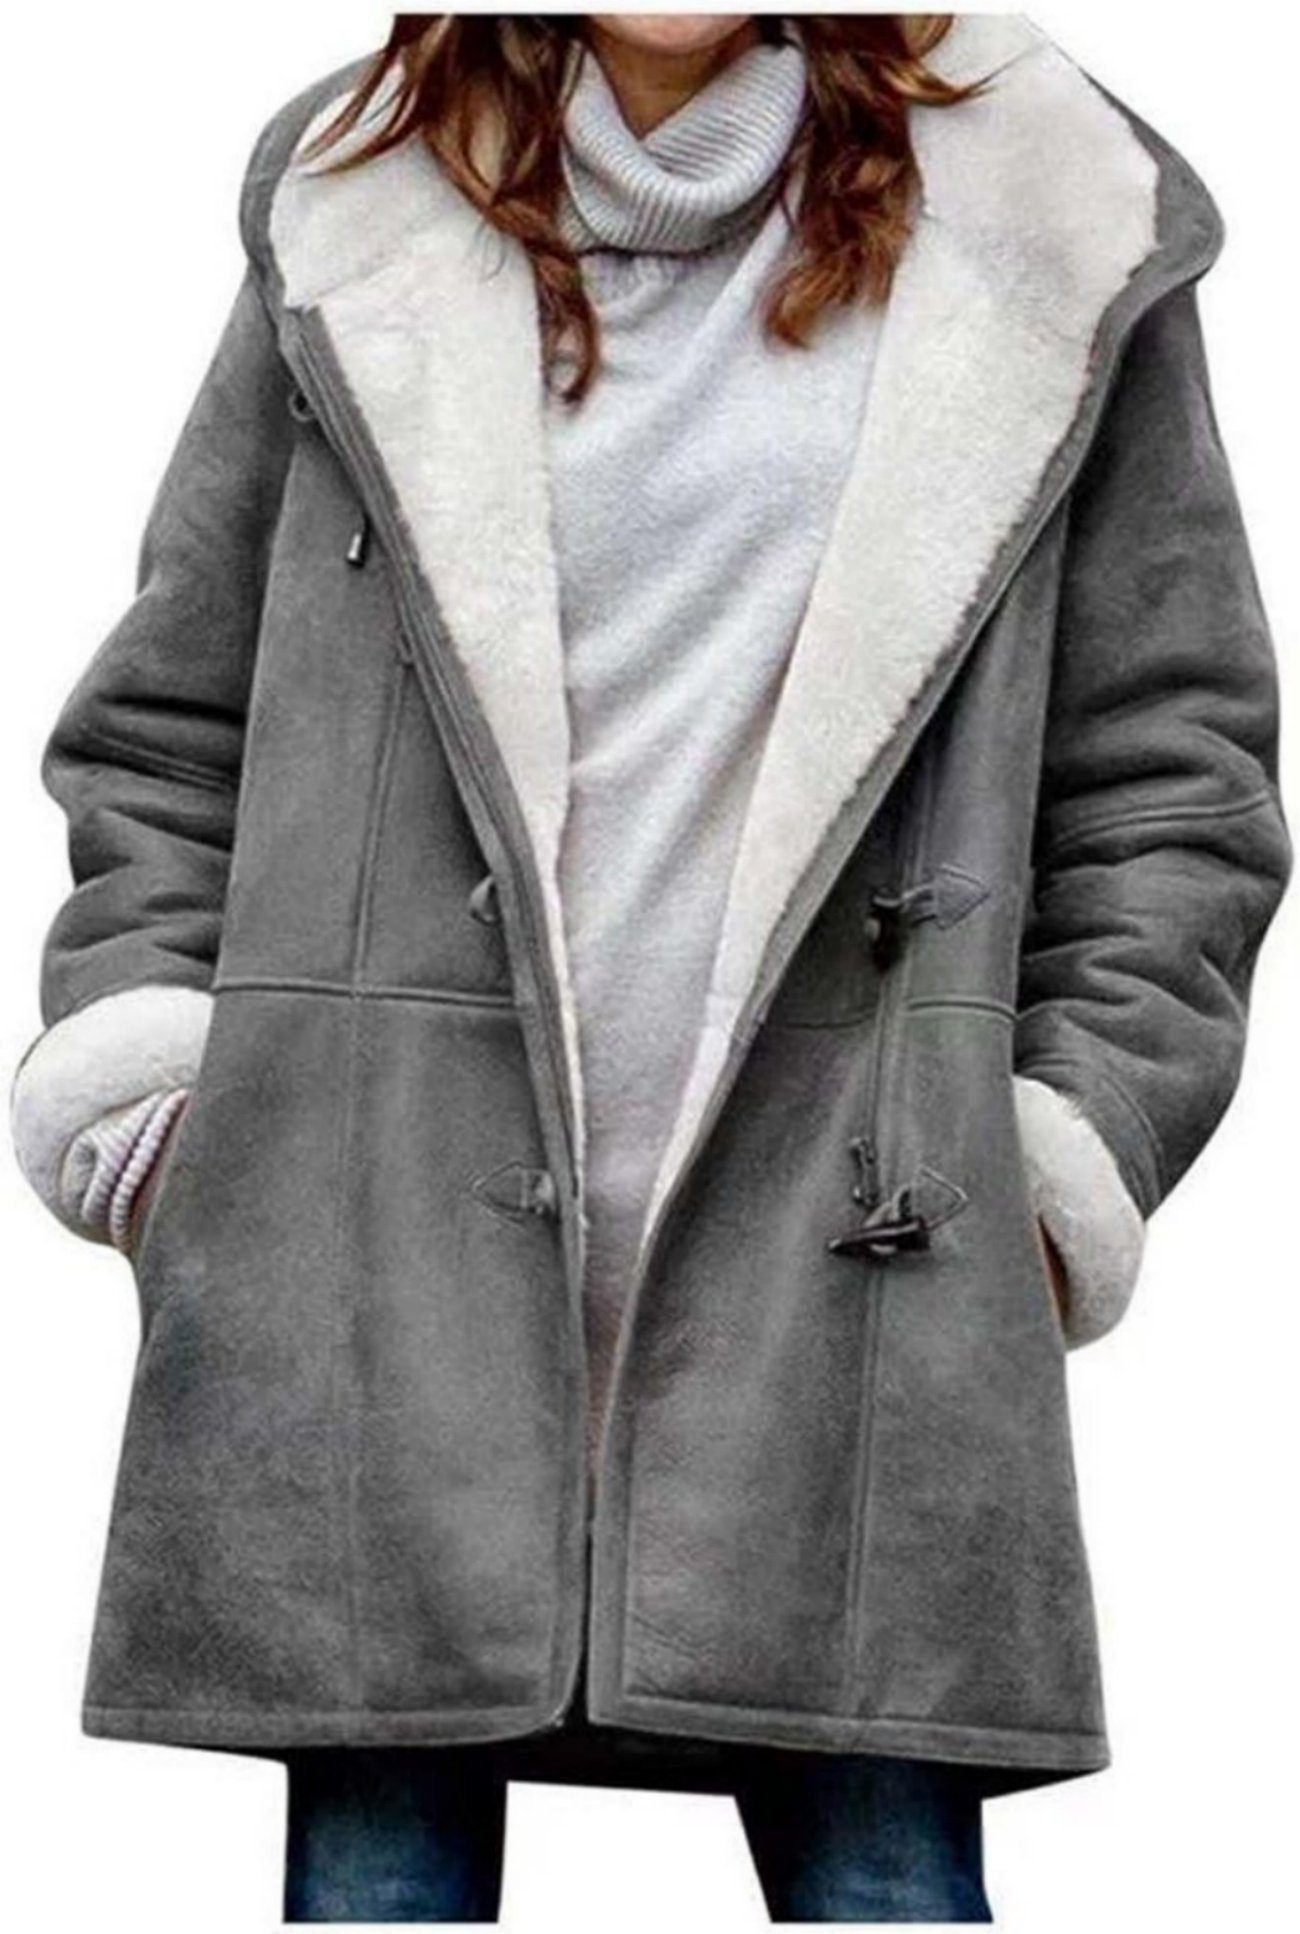 LIIKIL Anorak Pullover Einfarbig Lässige Strickjacke Warm Plus Samt Warme Jacke